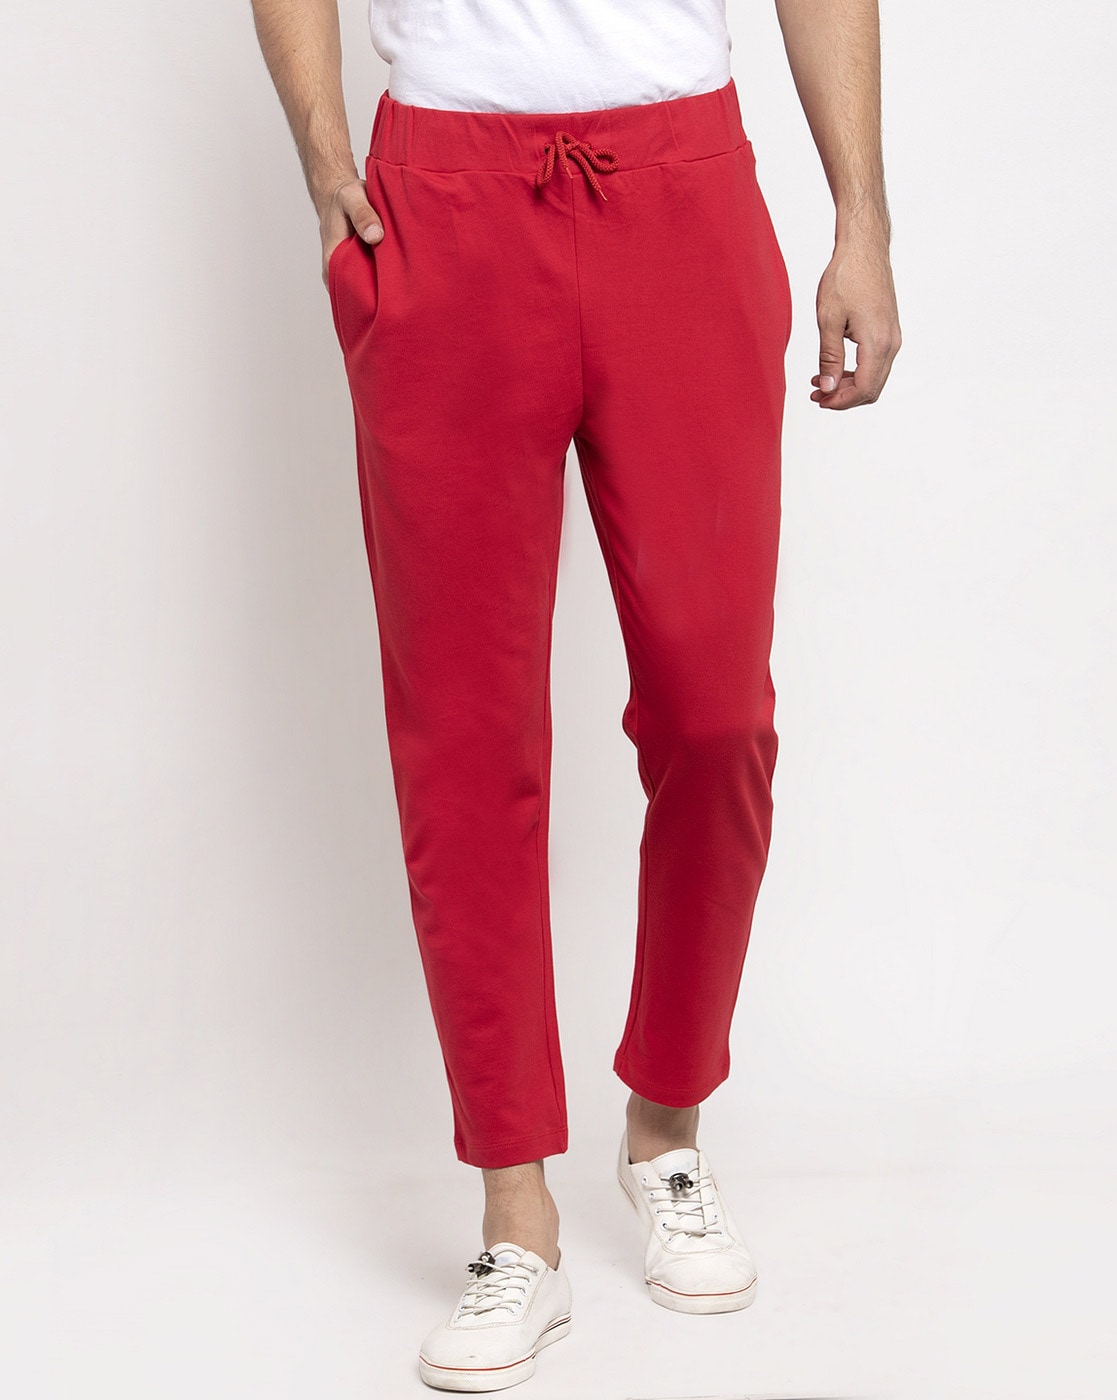 Buy Blue Track Pants for Women by Fashion 2 Wear Online | Ajio.com